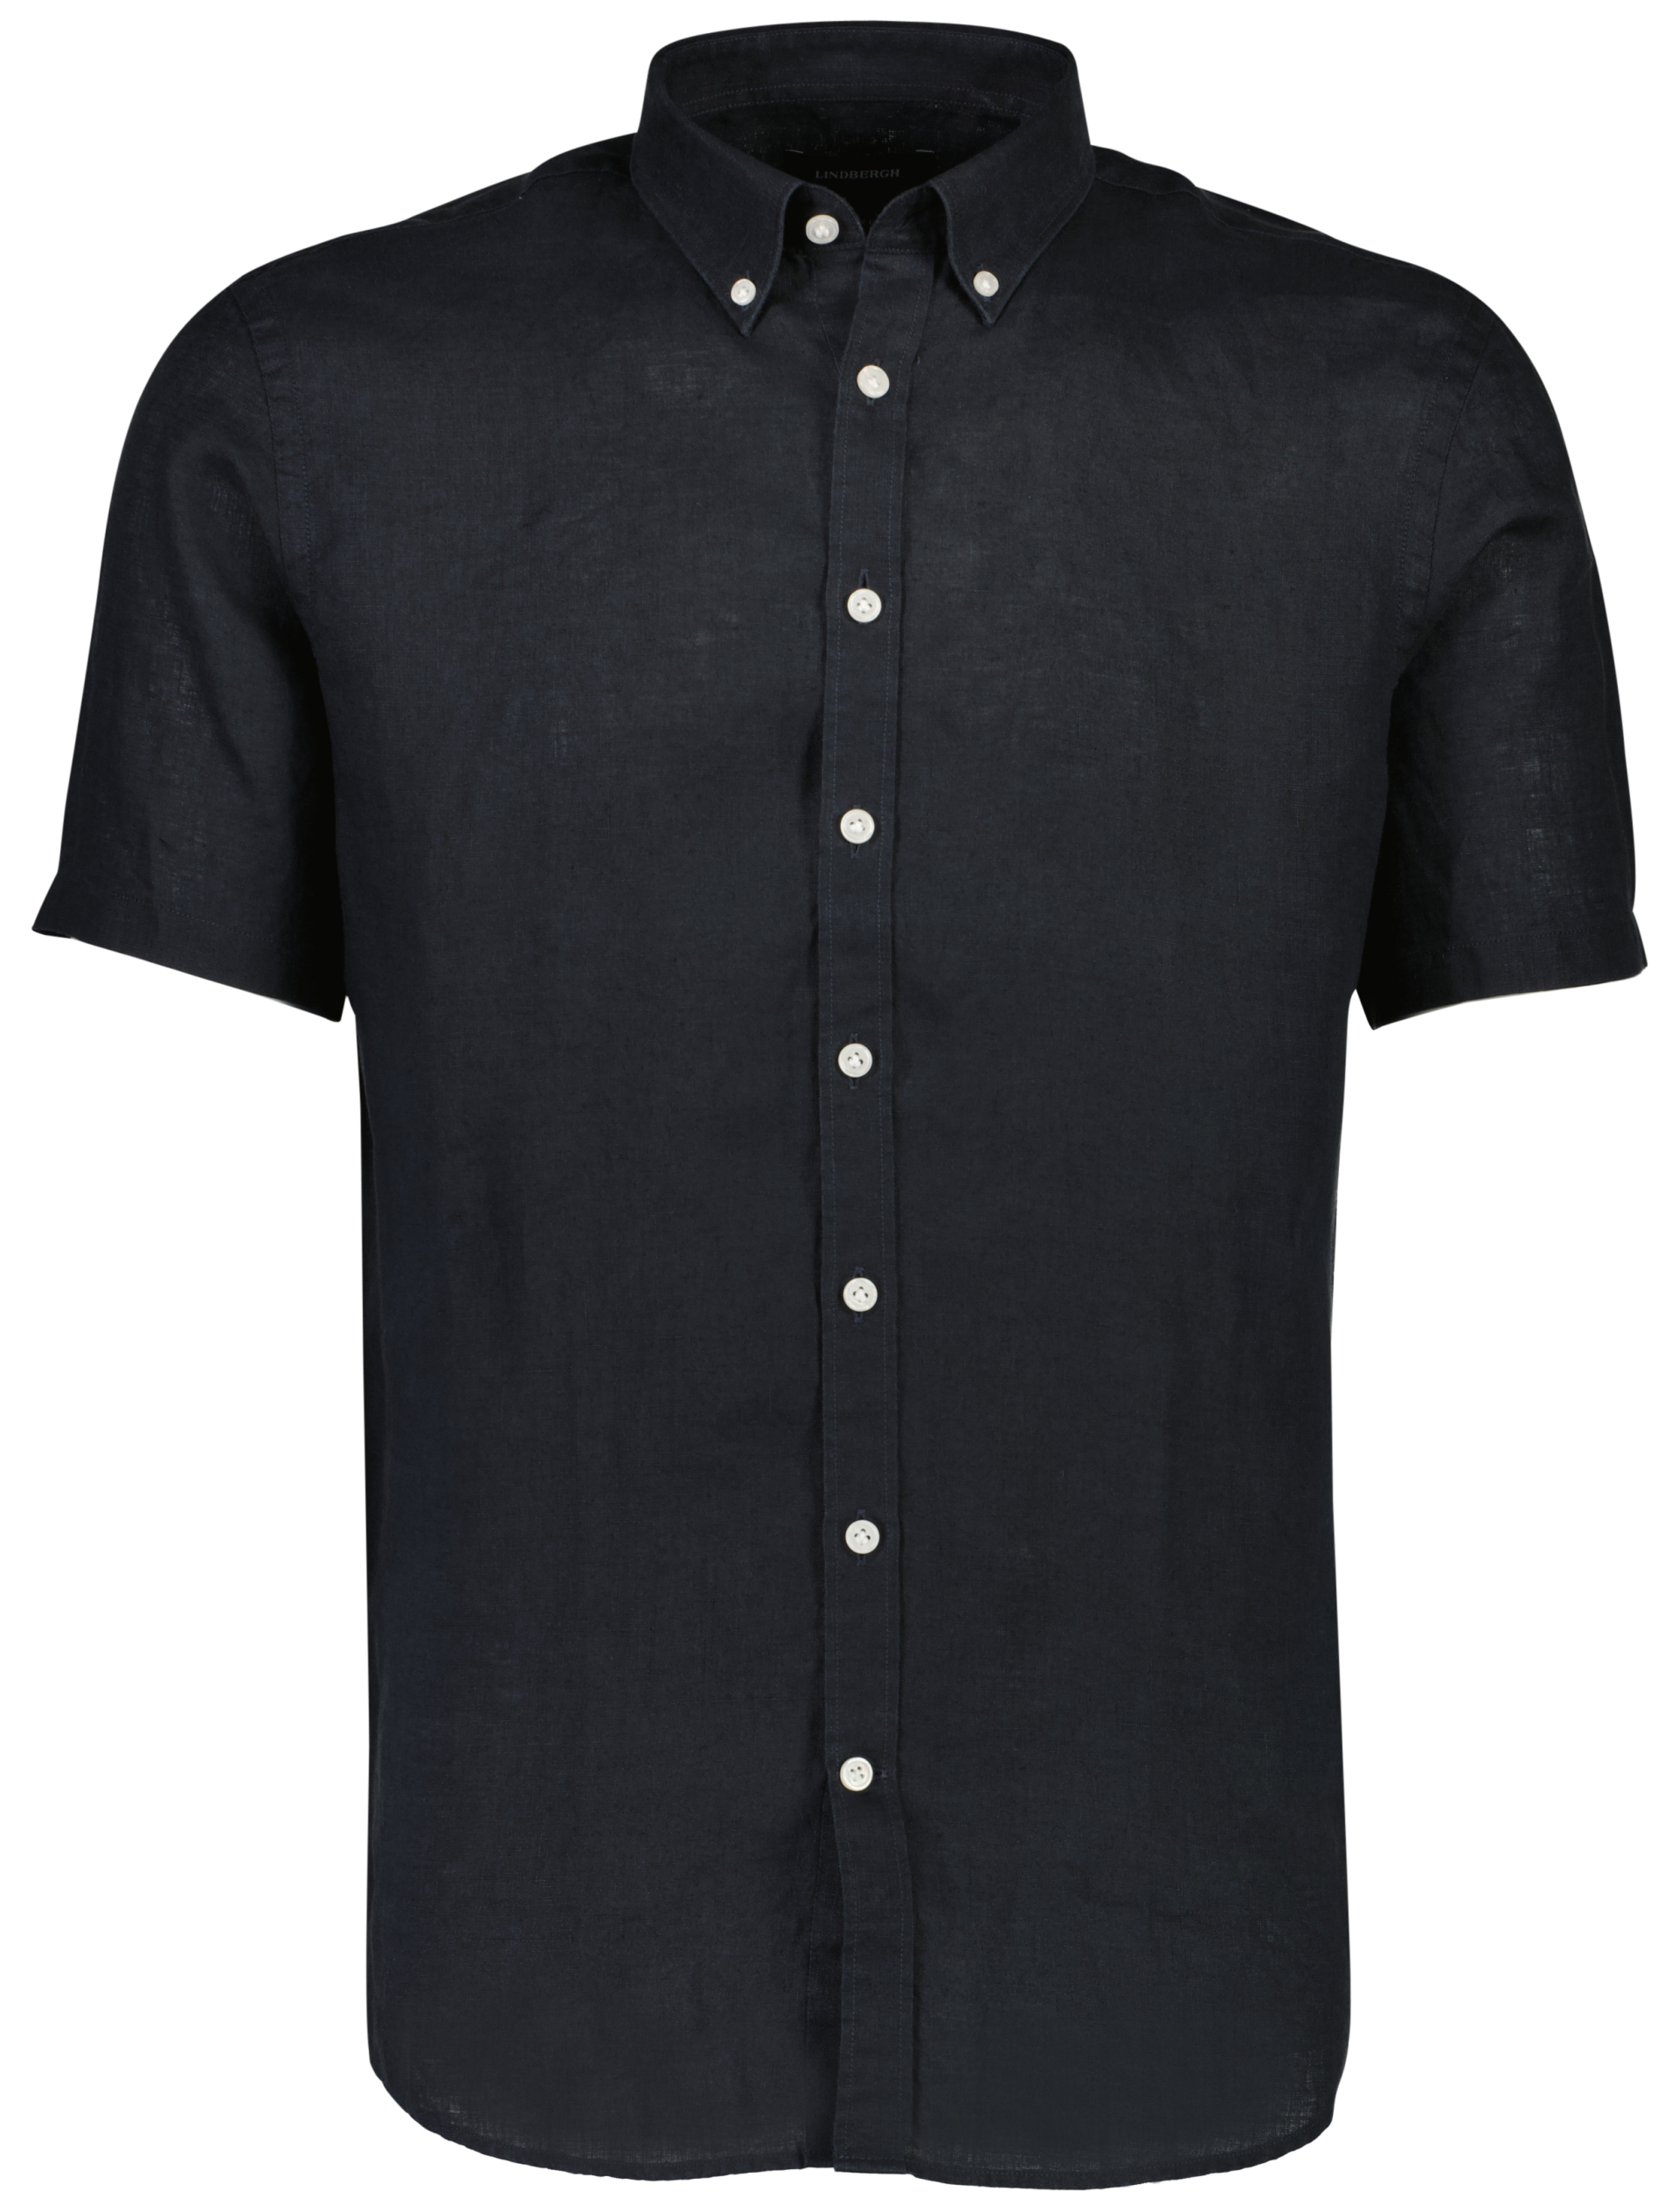 Lindbergh Linen shirt black / black